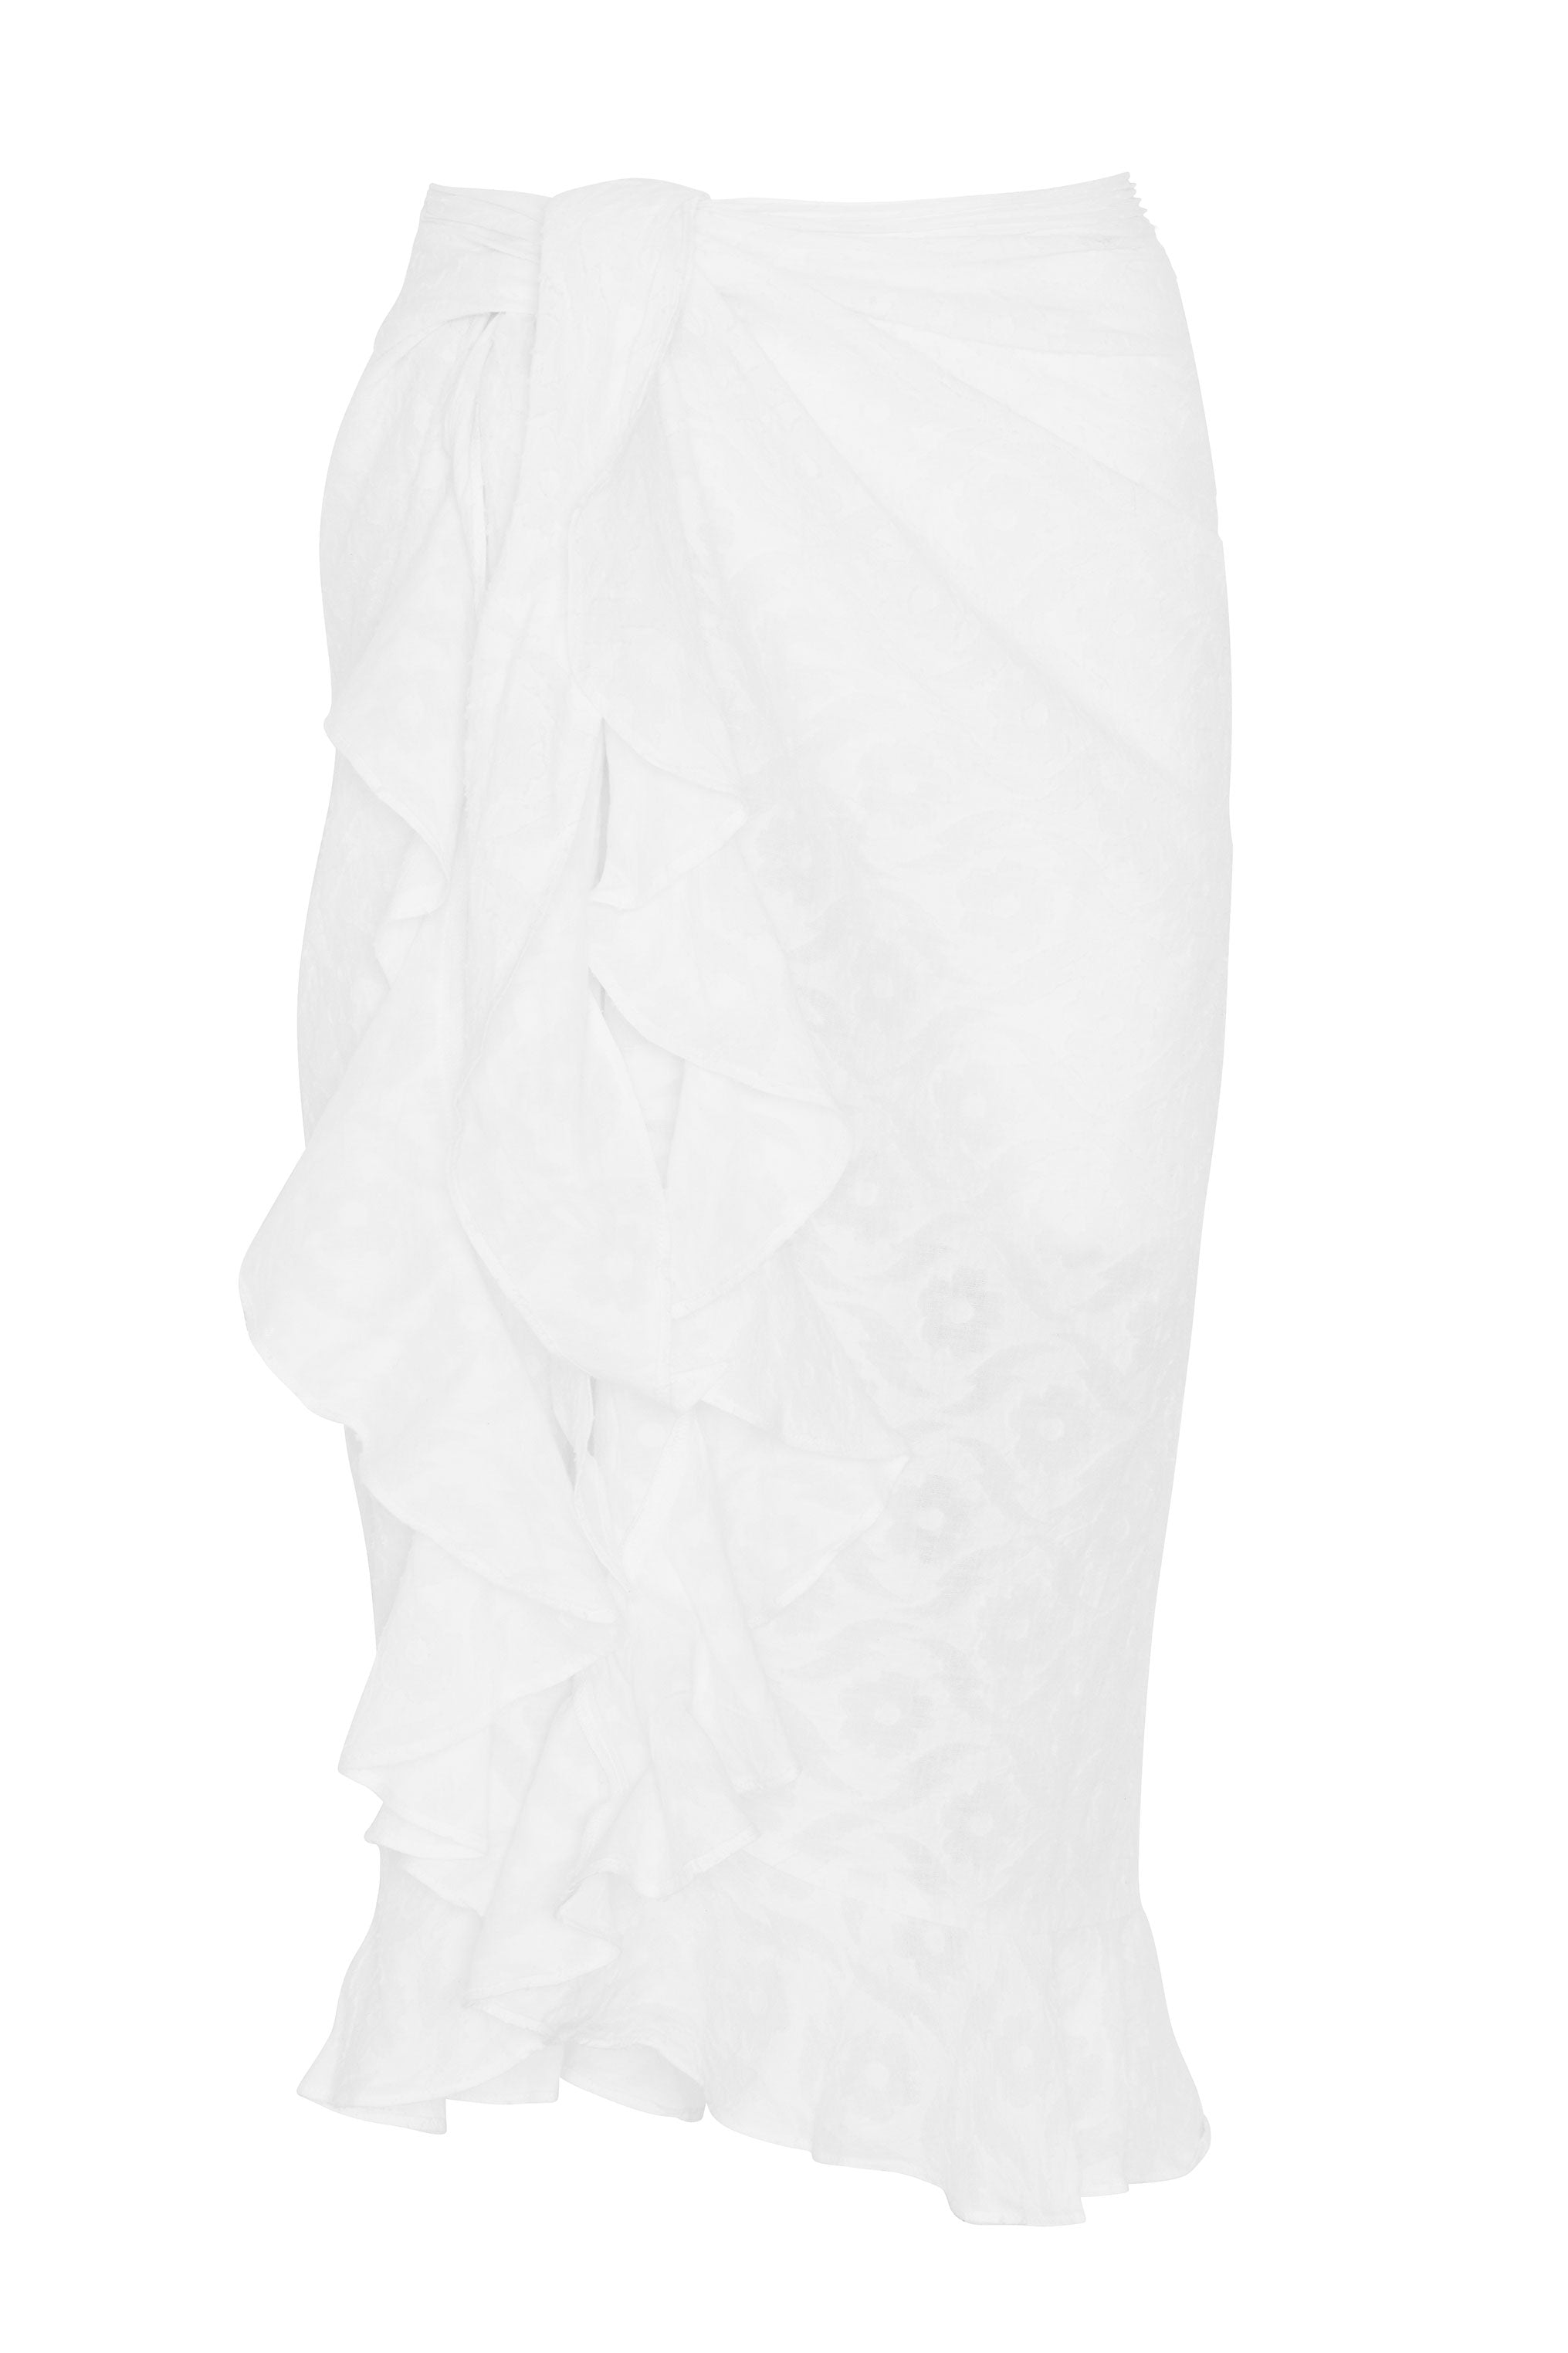 SITANO Cover Up One Size / White Siena Sarong